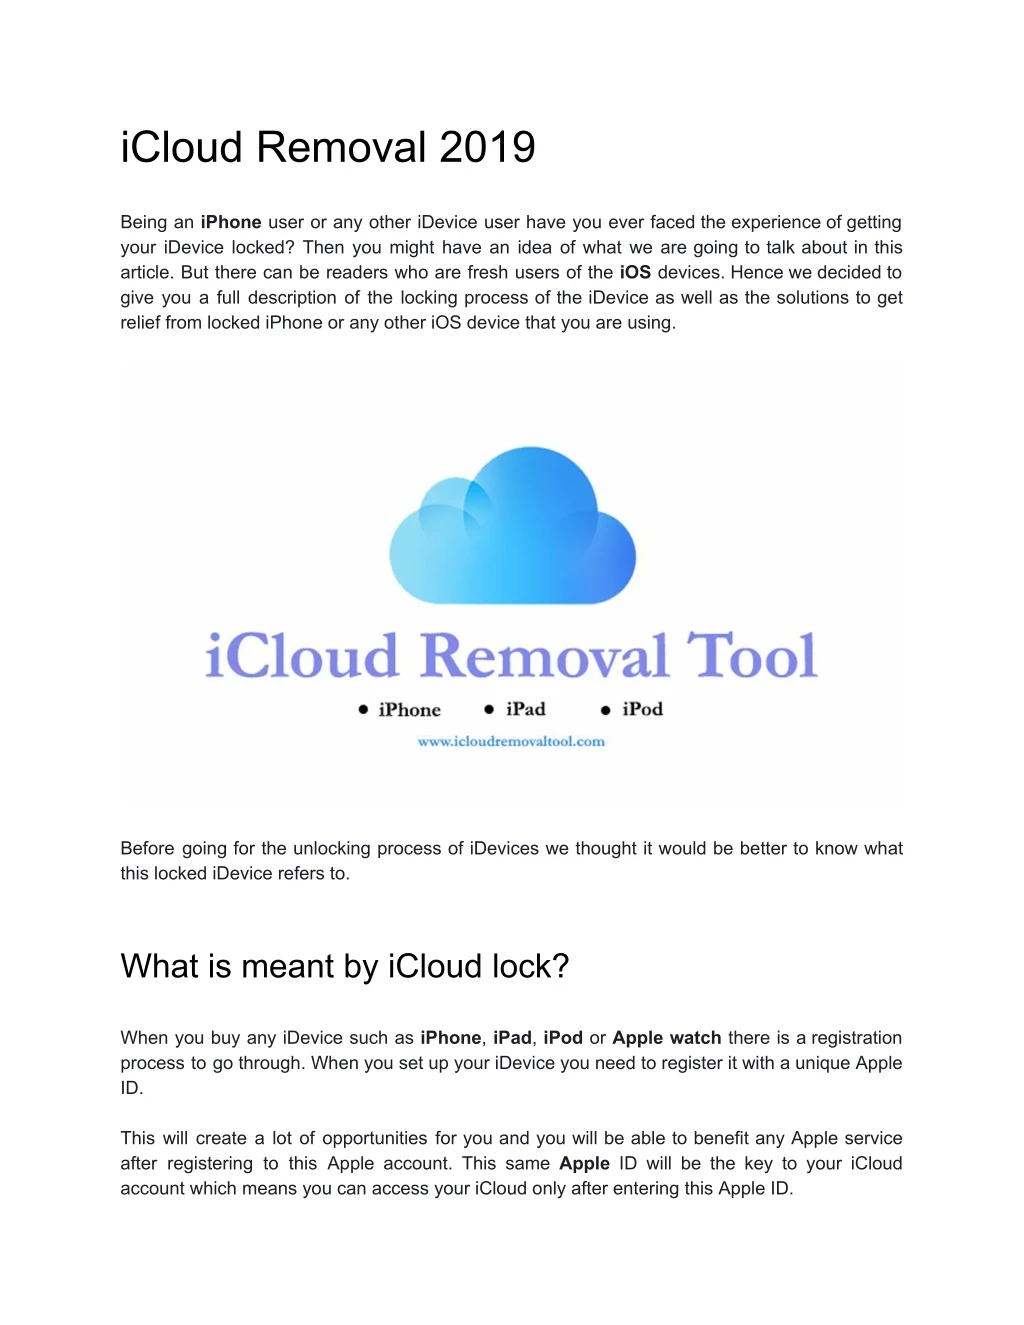 icloud removal 2019